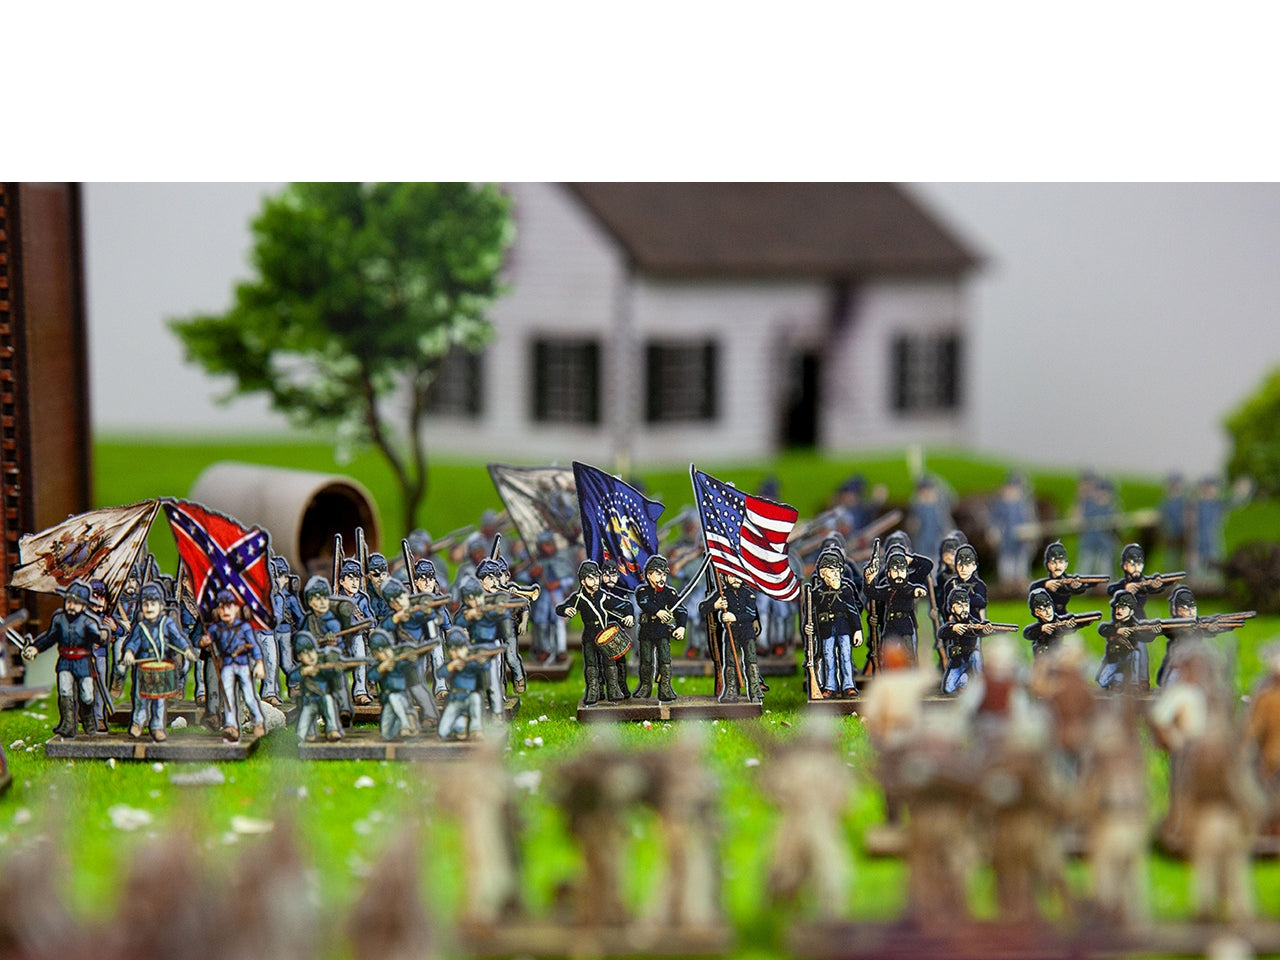 18mm Civil War Collection